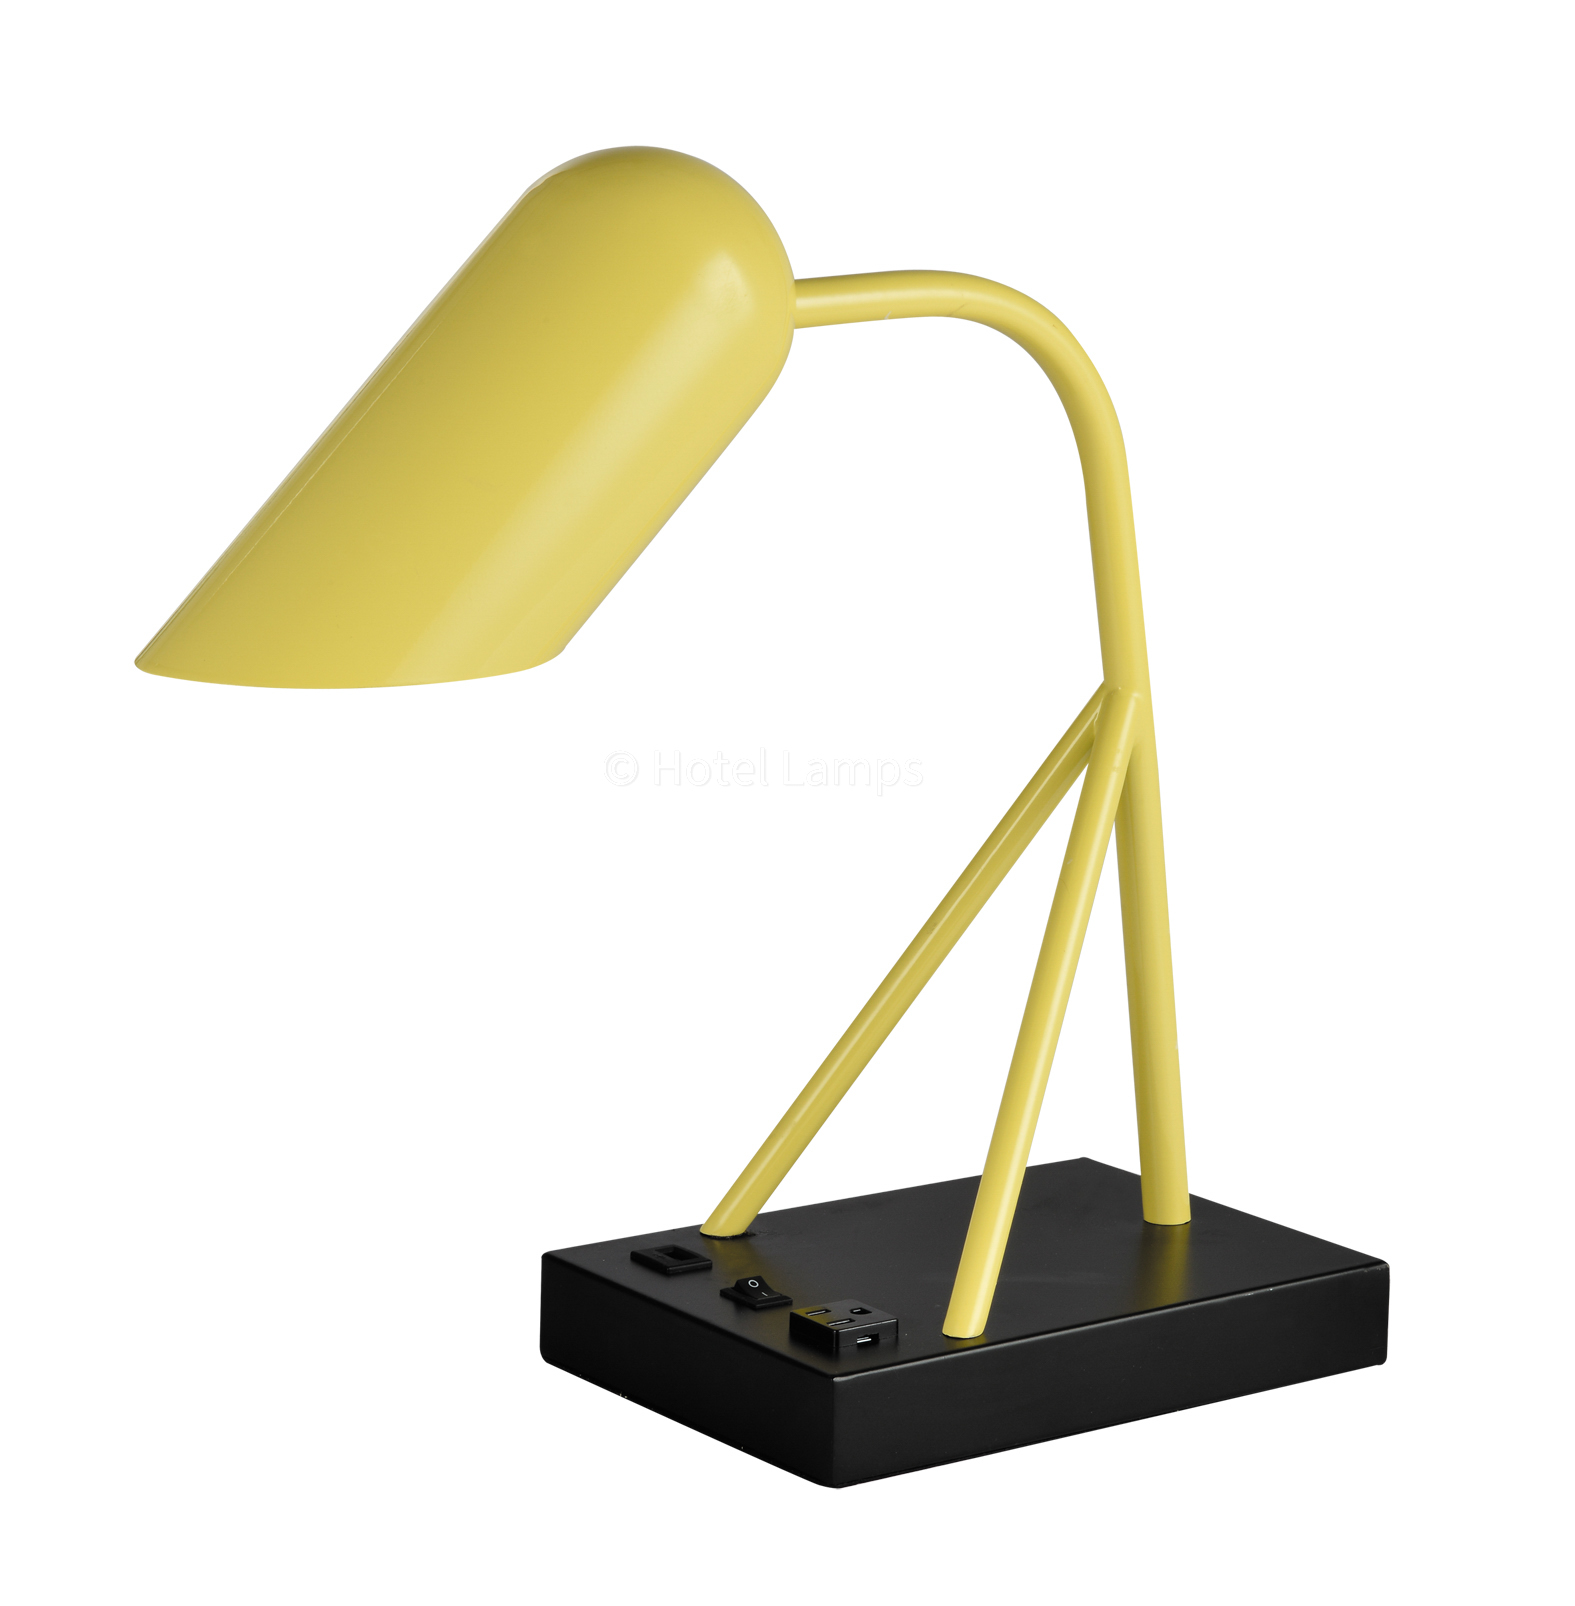 Gemini Desk Lamp Yellow